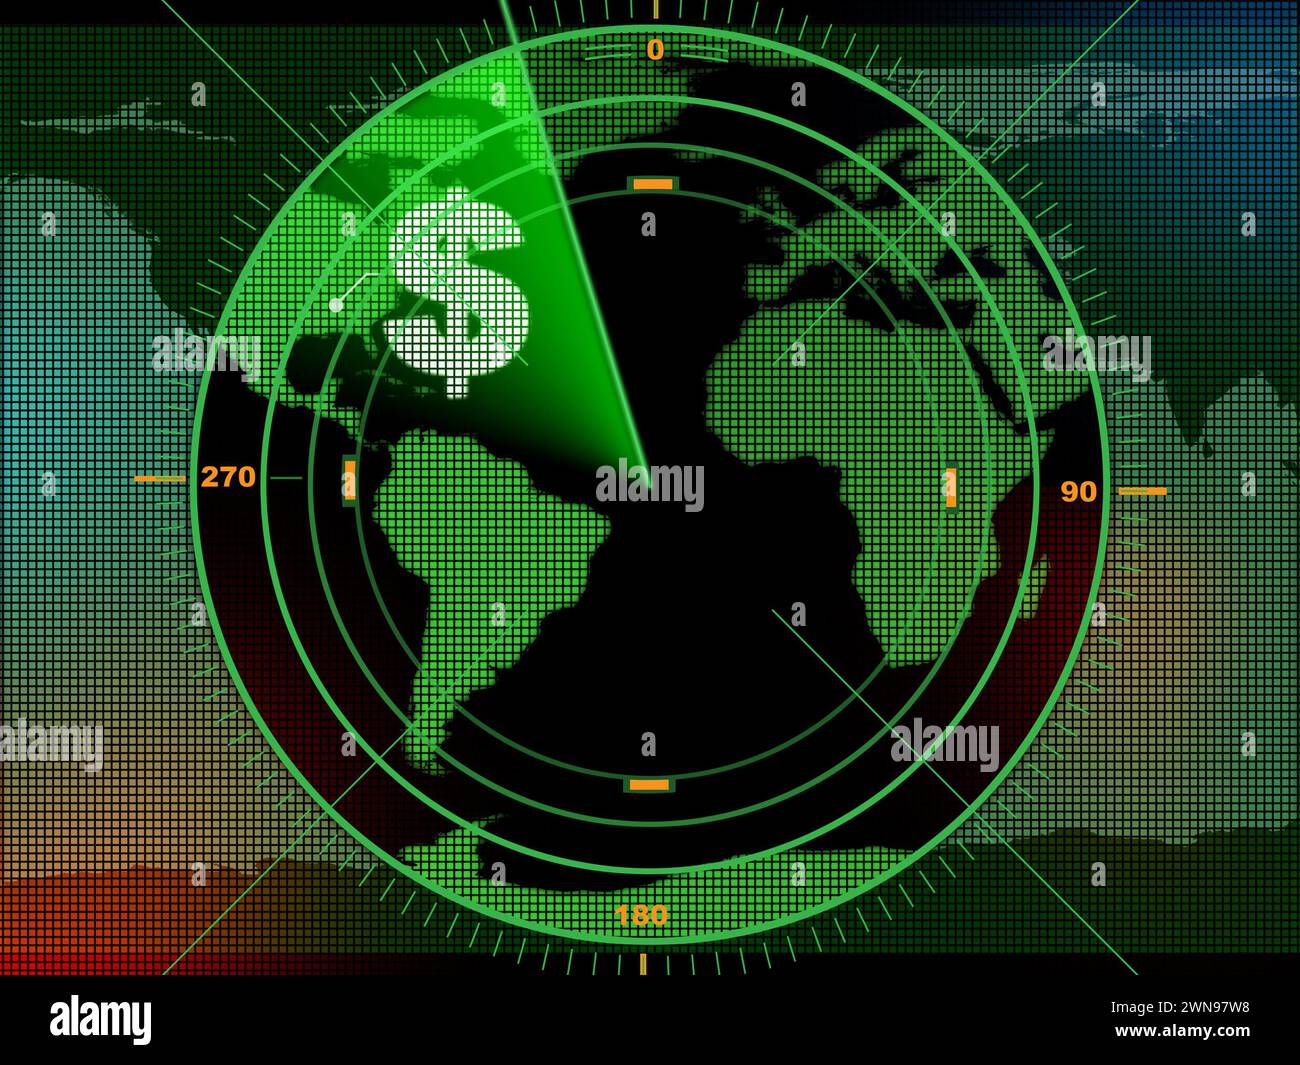 Radar screen locating business opportunities over the world. Digital illustration. Stock Photo